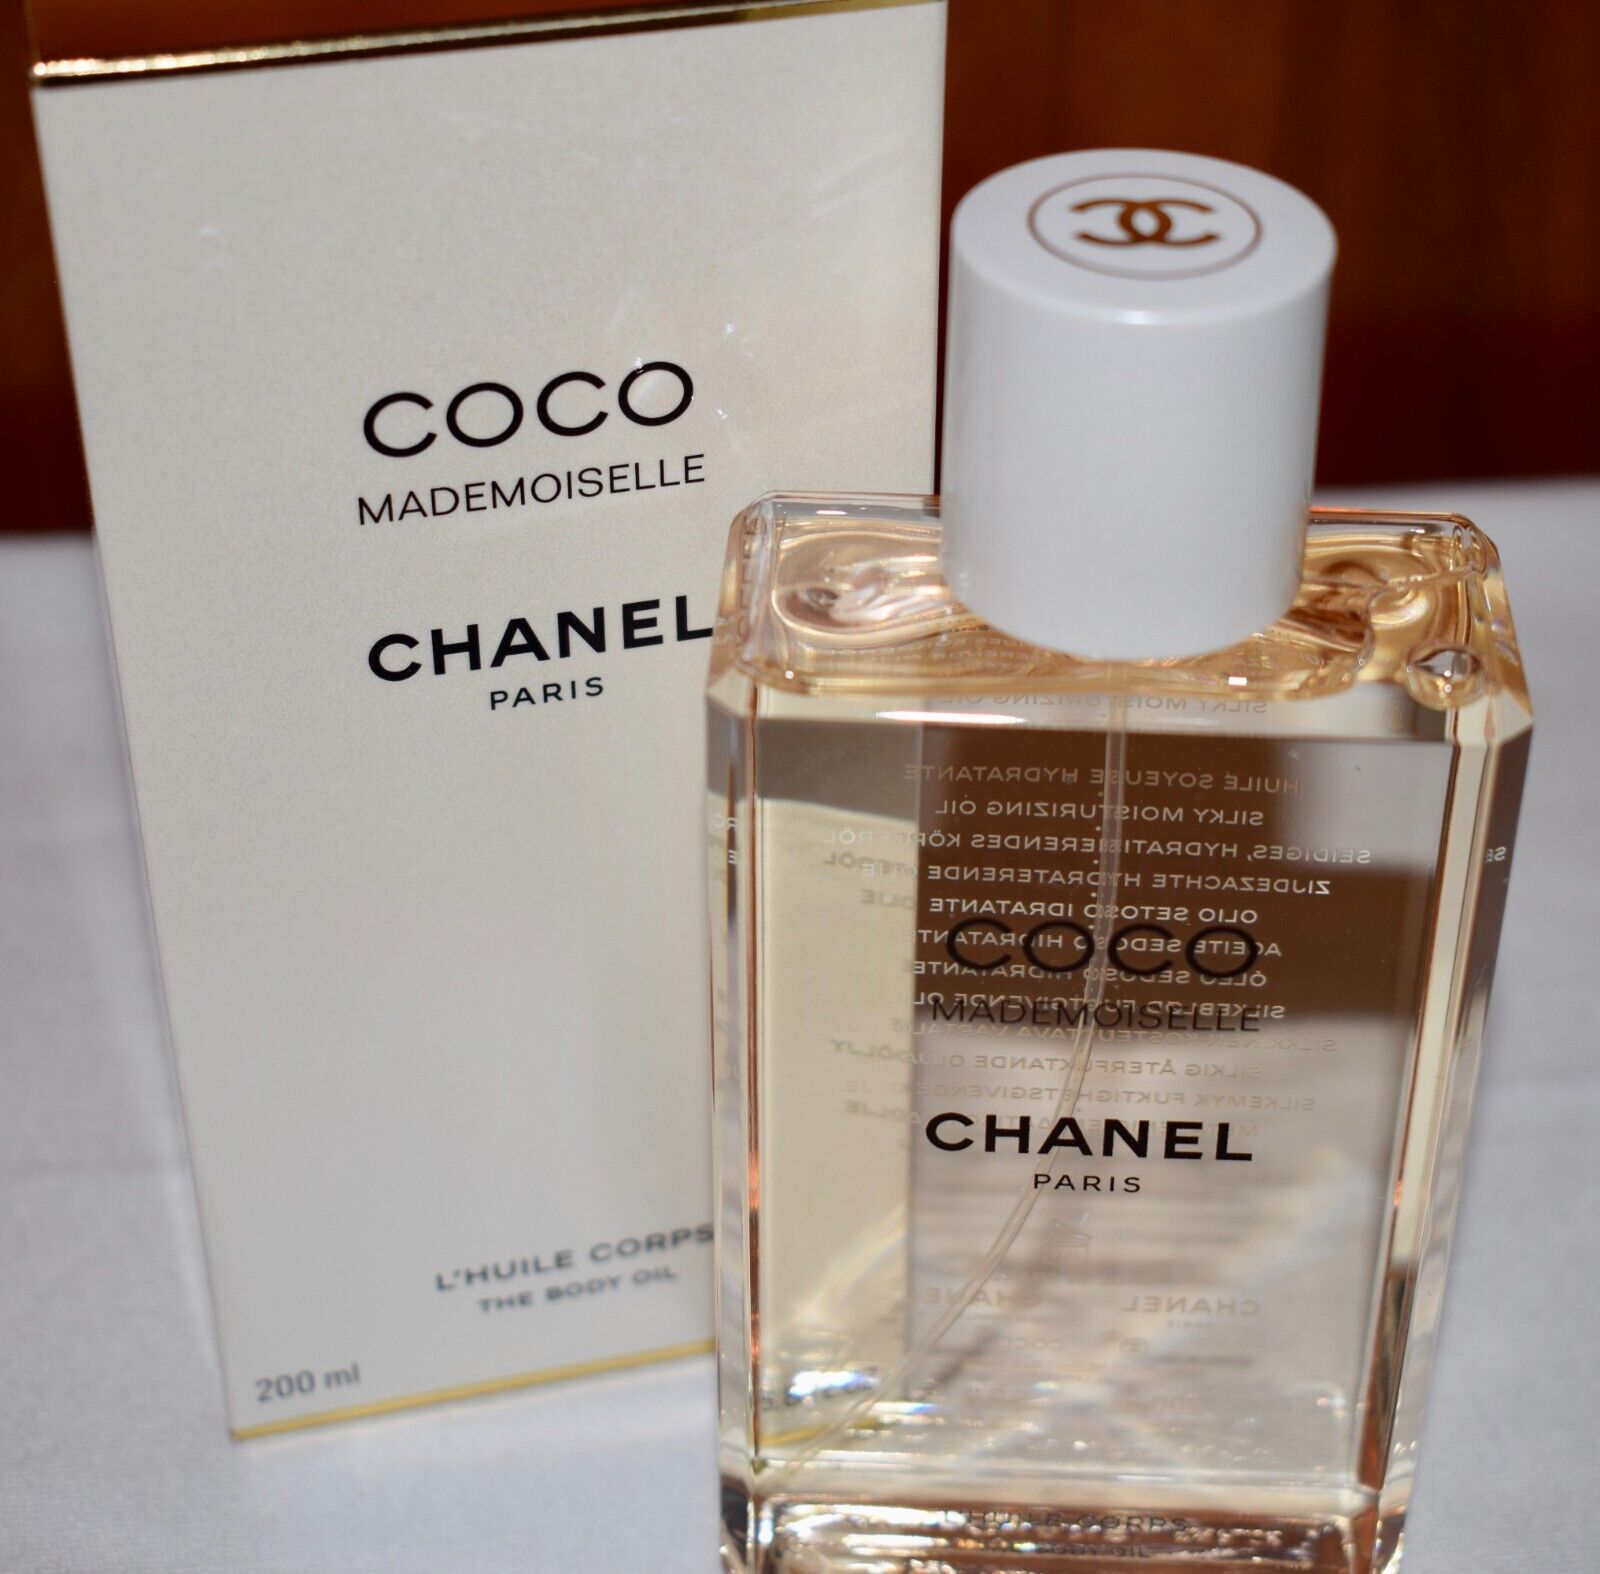 coco chanel mademoiselle body oil